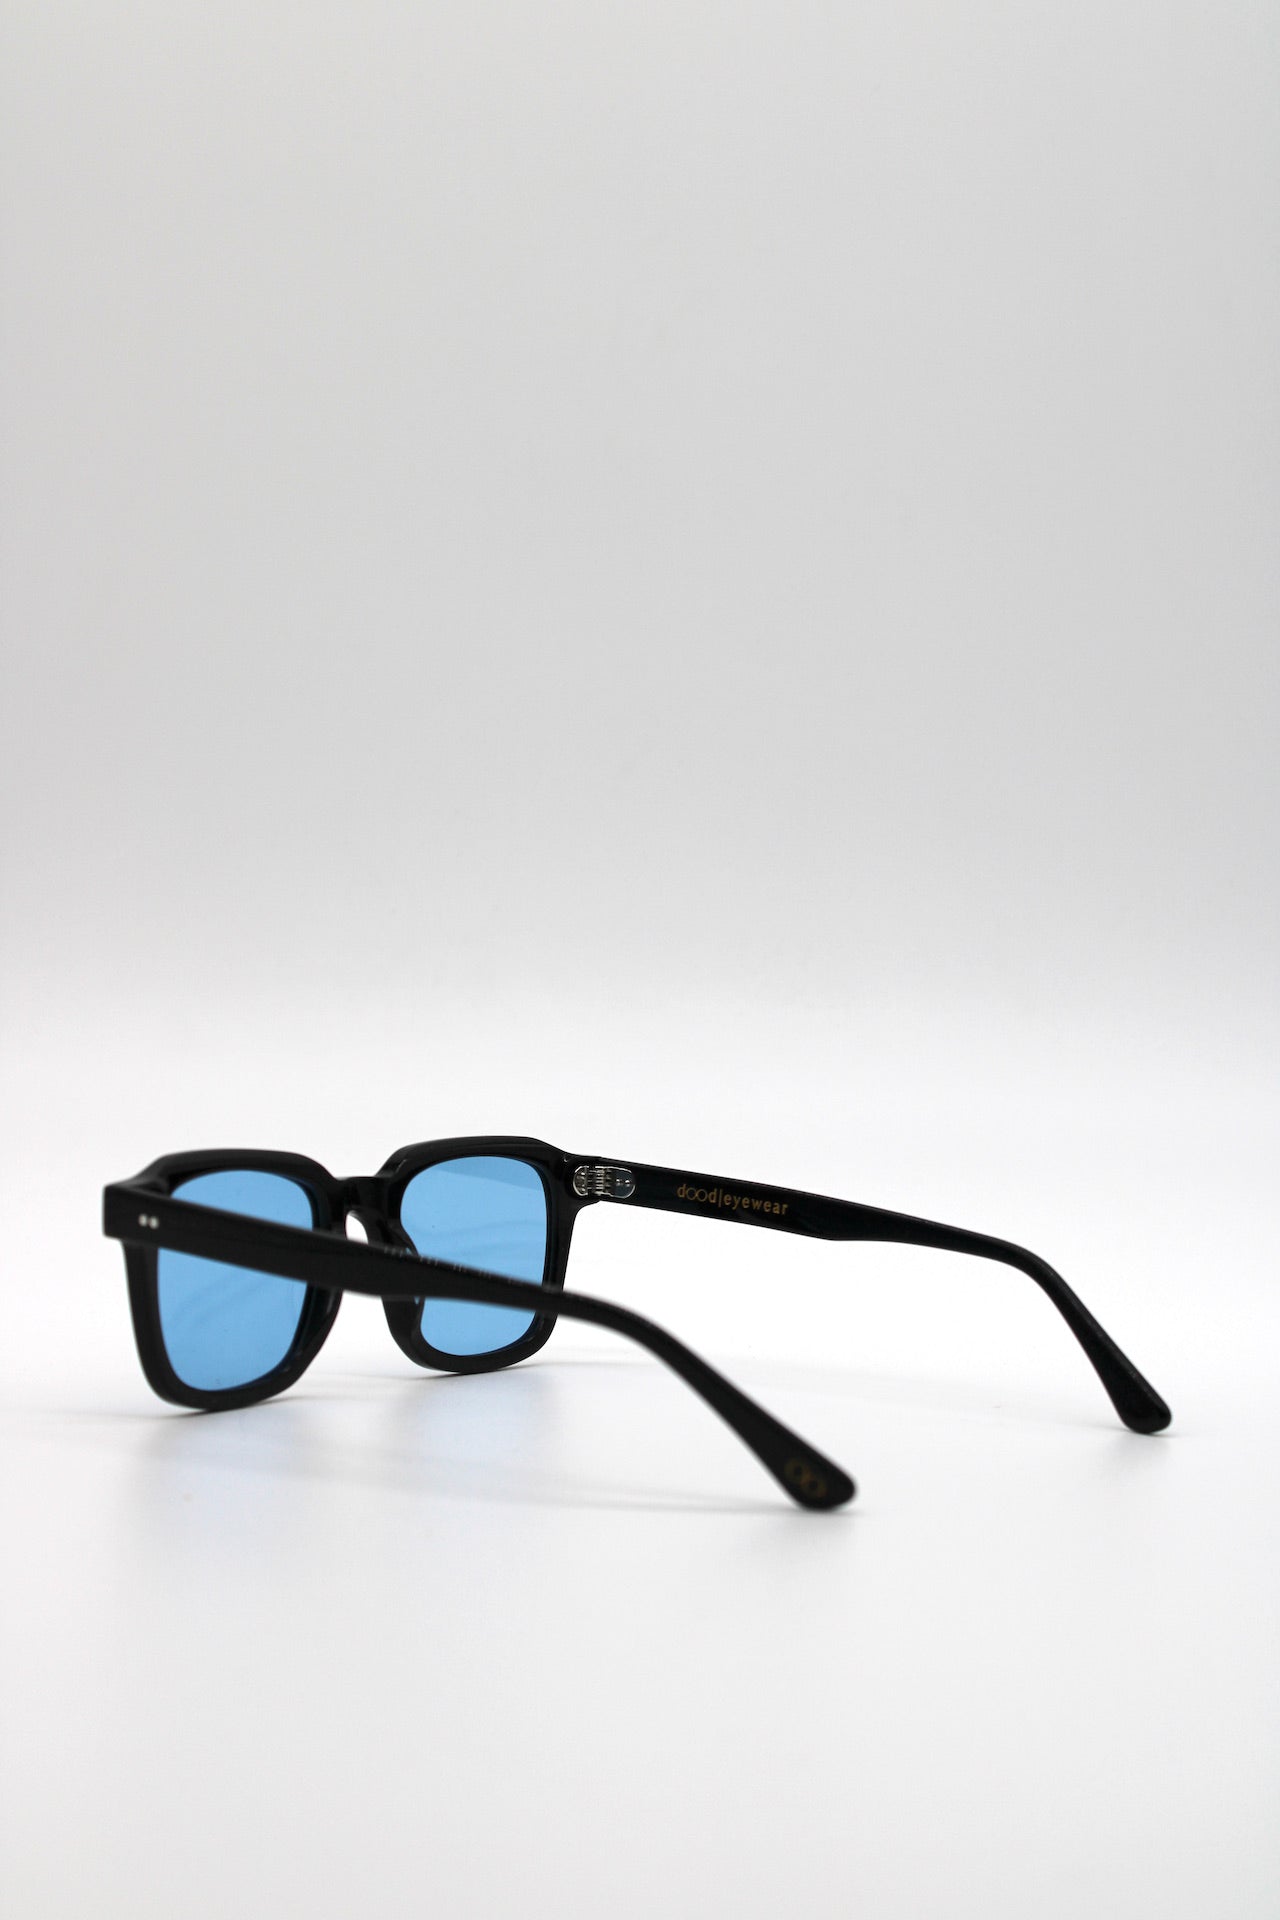 160 Originals Bold Black Frame with Unique Blue Lenses